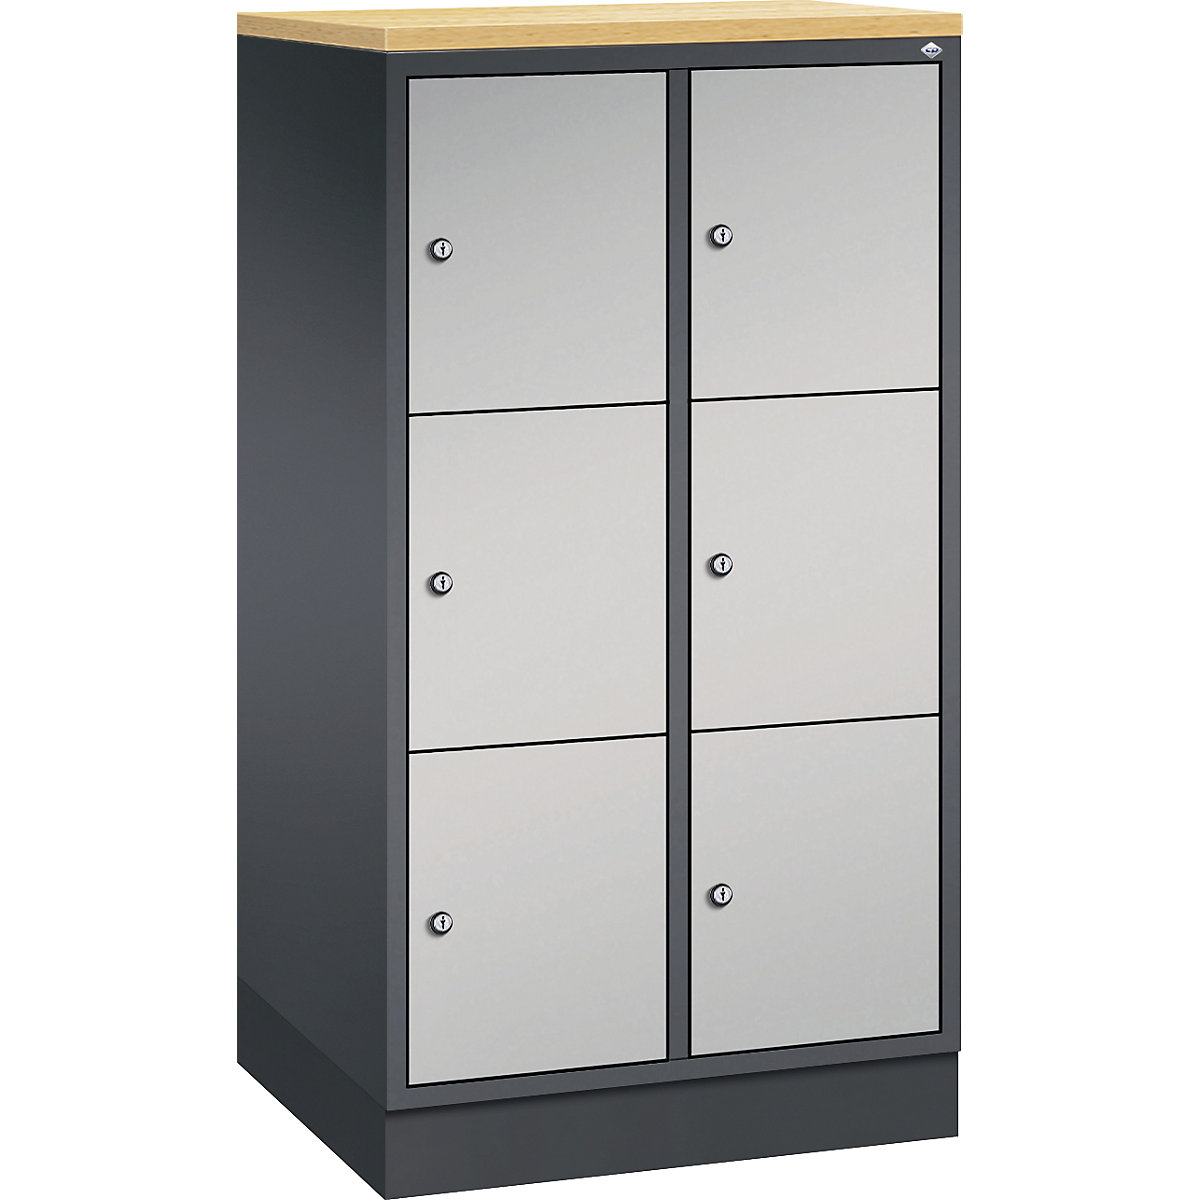 INTRO steel compartment locker, compartment height 345 mm – C+P, WxD 620 x 500 mm, 6 compartments, black grey body, white aluminium doors